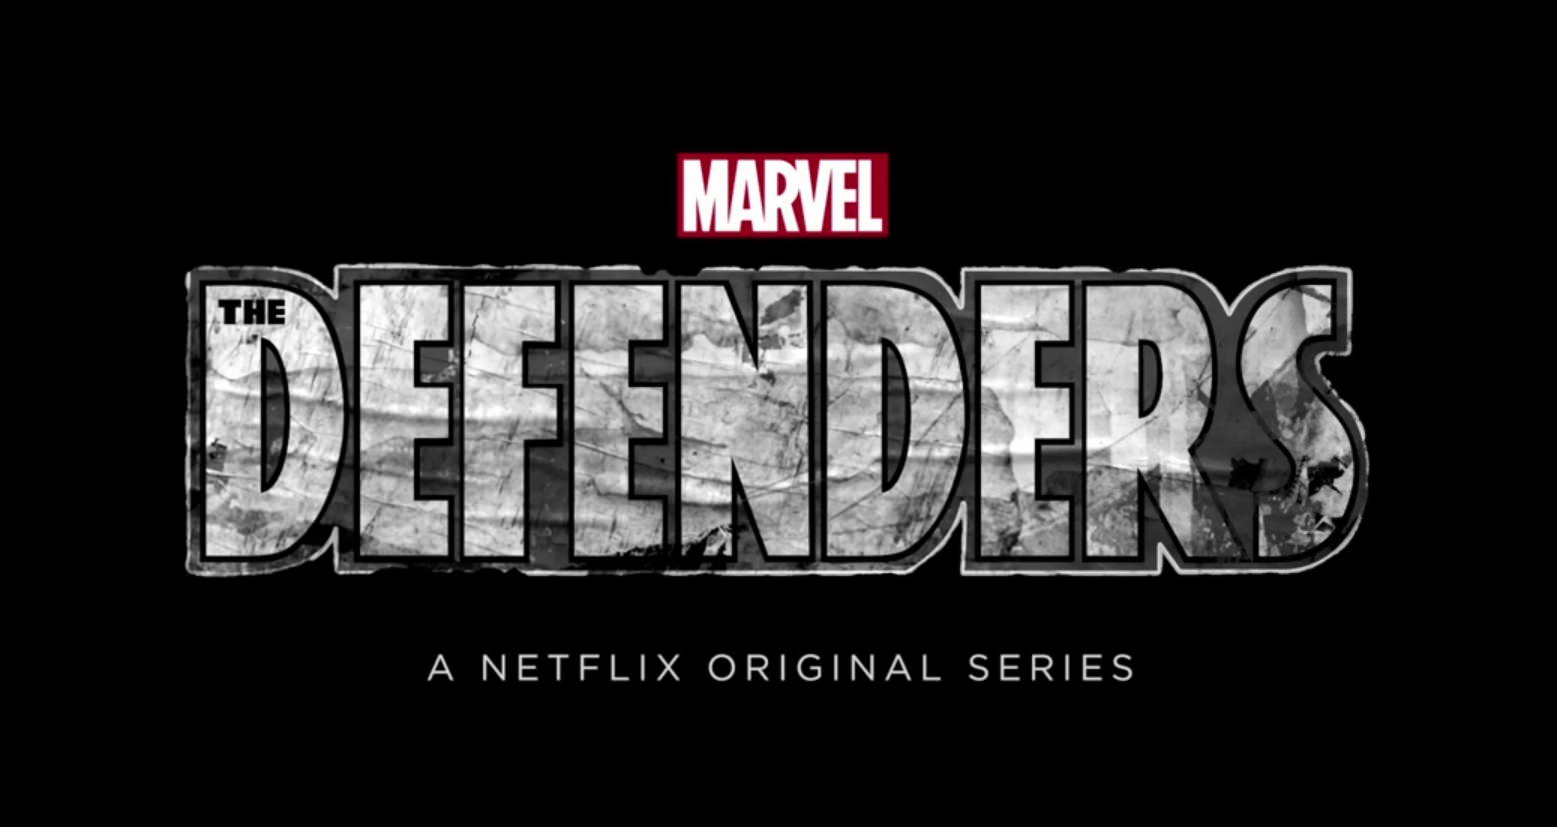 The Defenders: Marvel rivela il logo e un teaser trailer